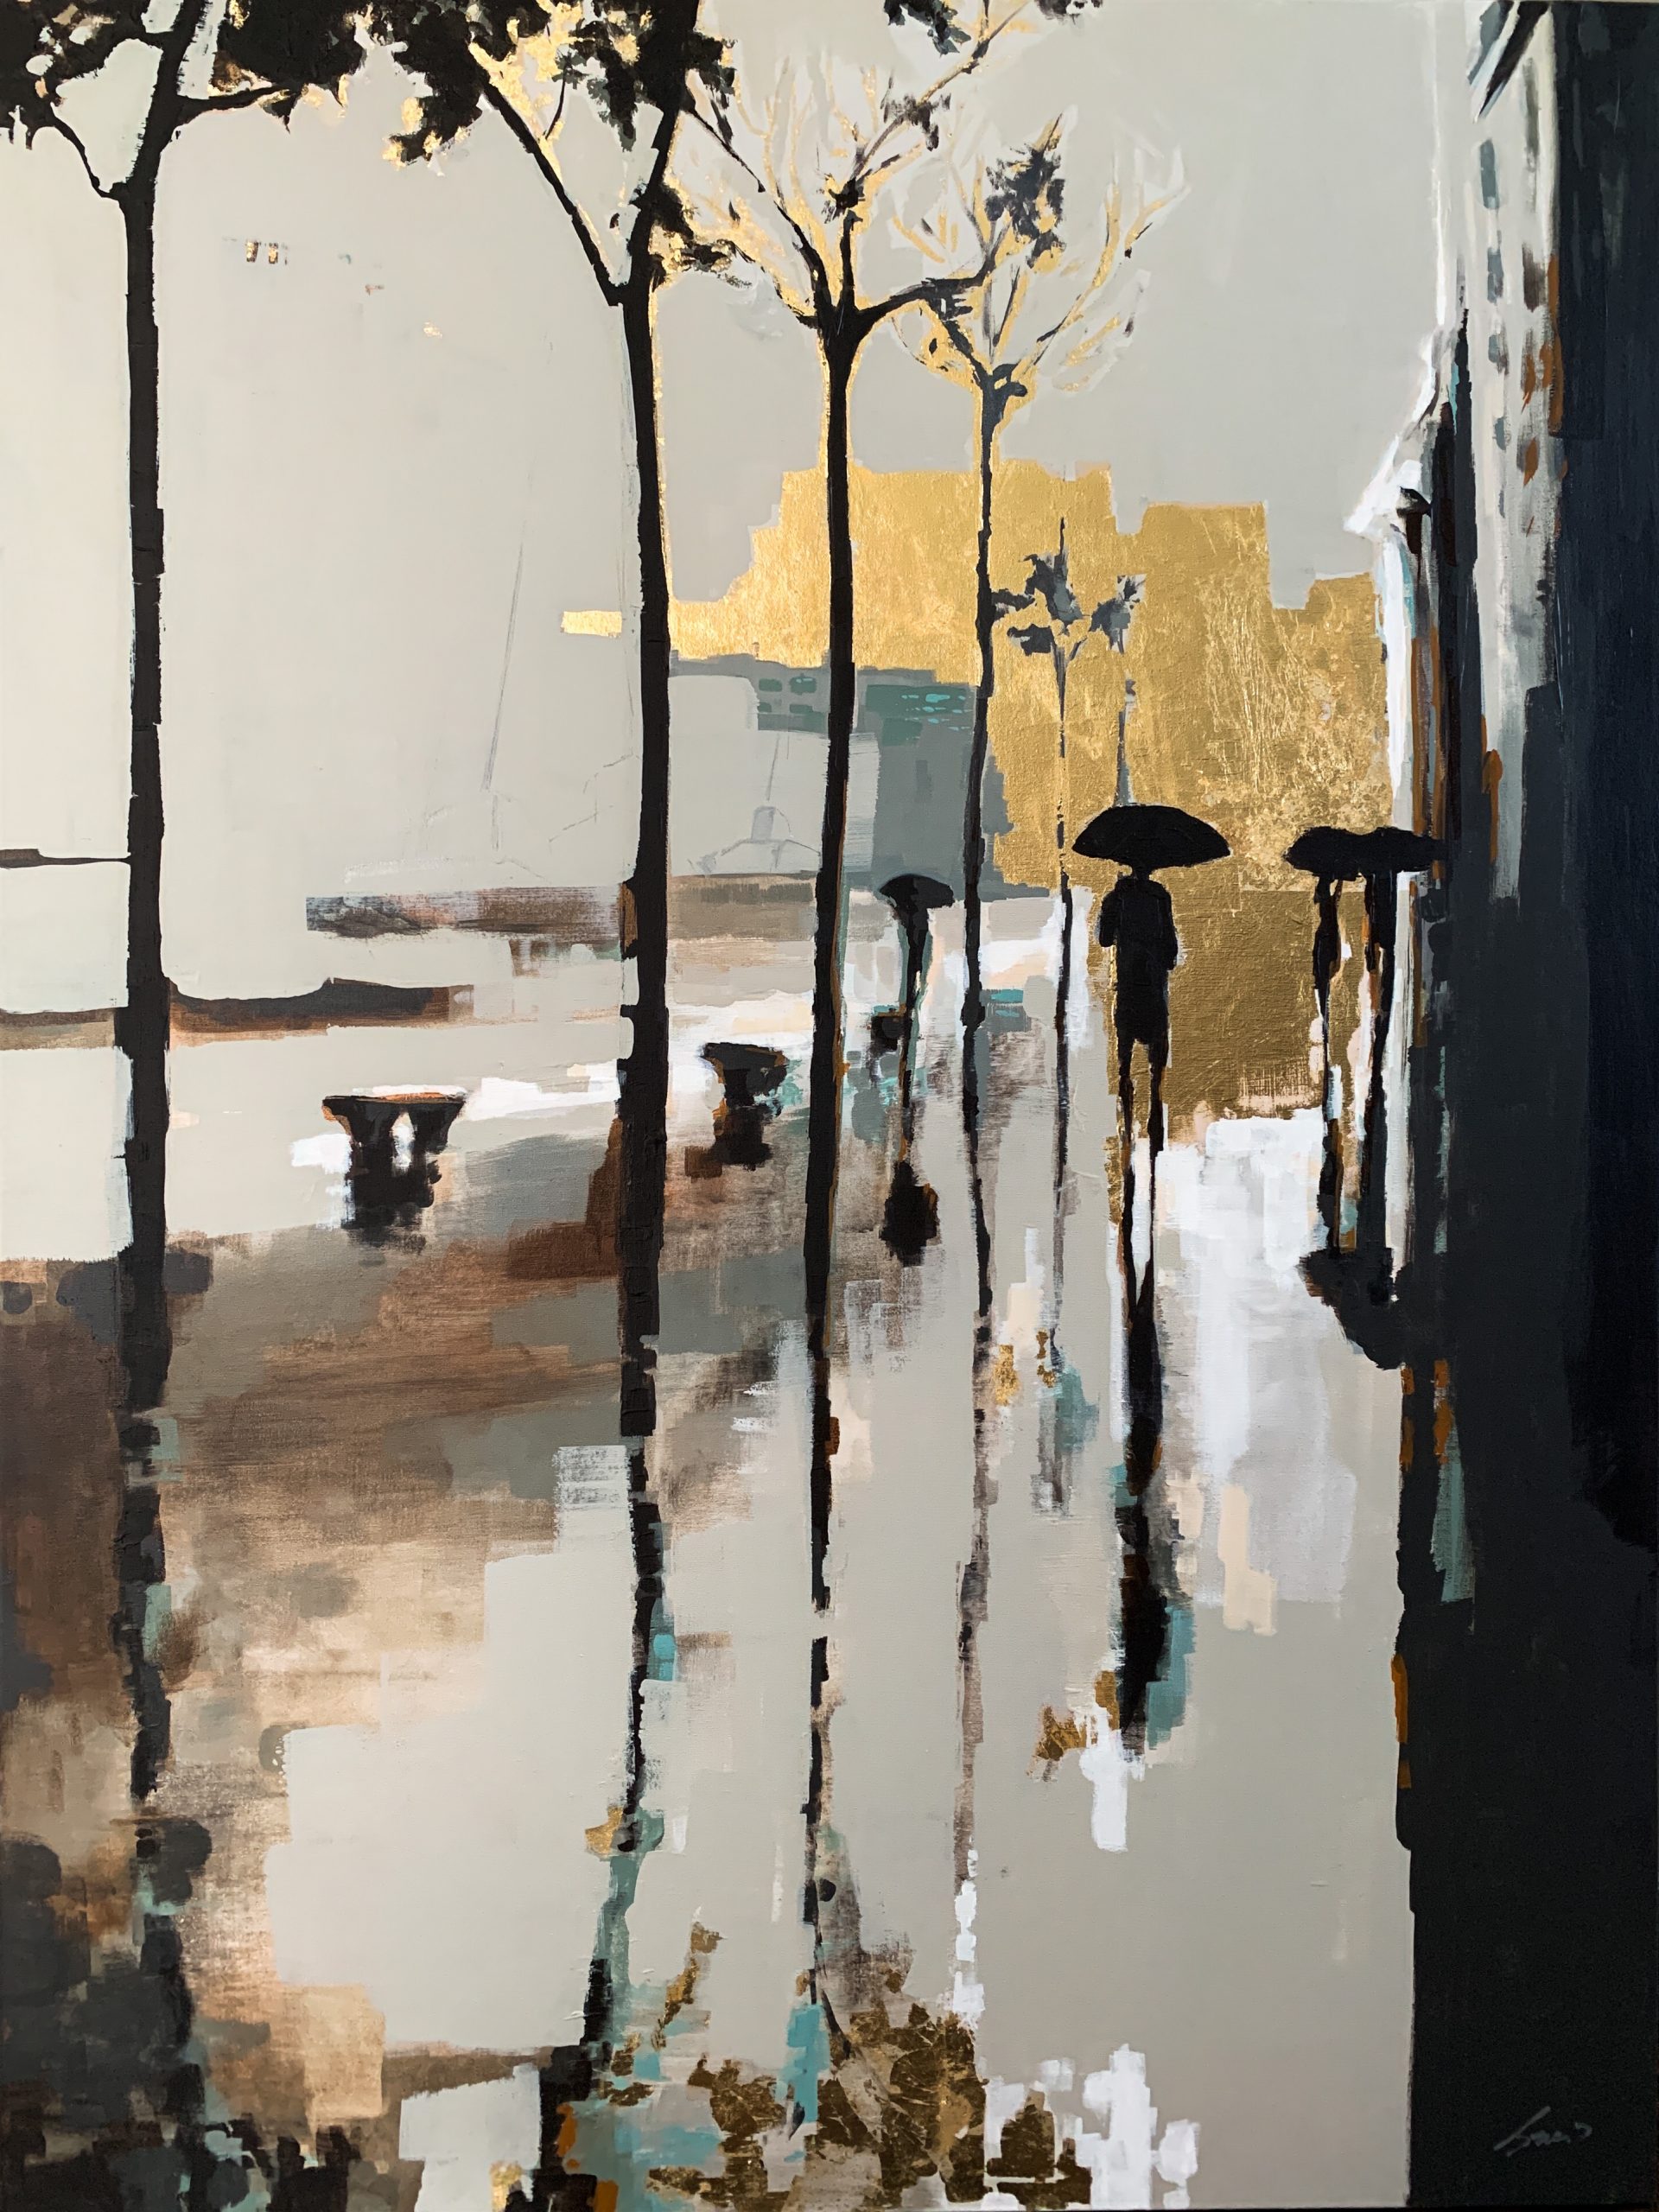 Le Quai des Brumes, mixed media cityscape painting by Marie-France Boisvert | Effusion Art Gallery + Cast Glass Studio, Invermere BC